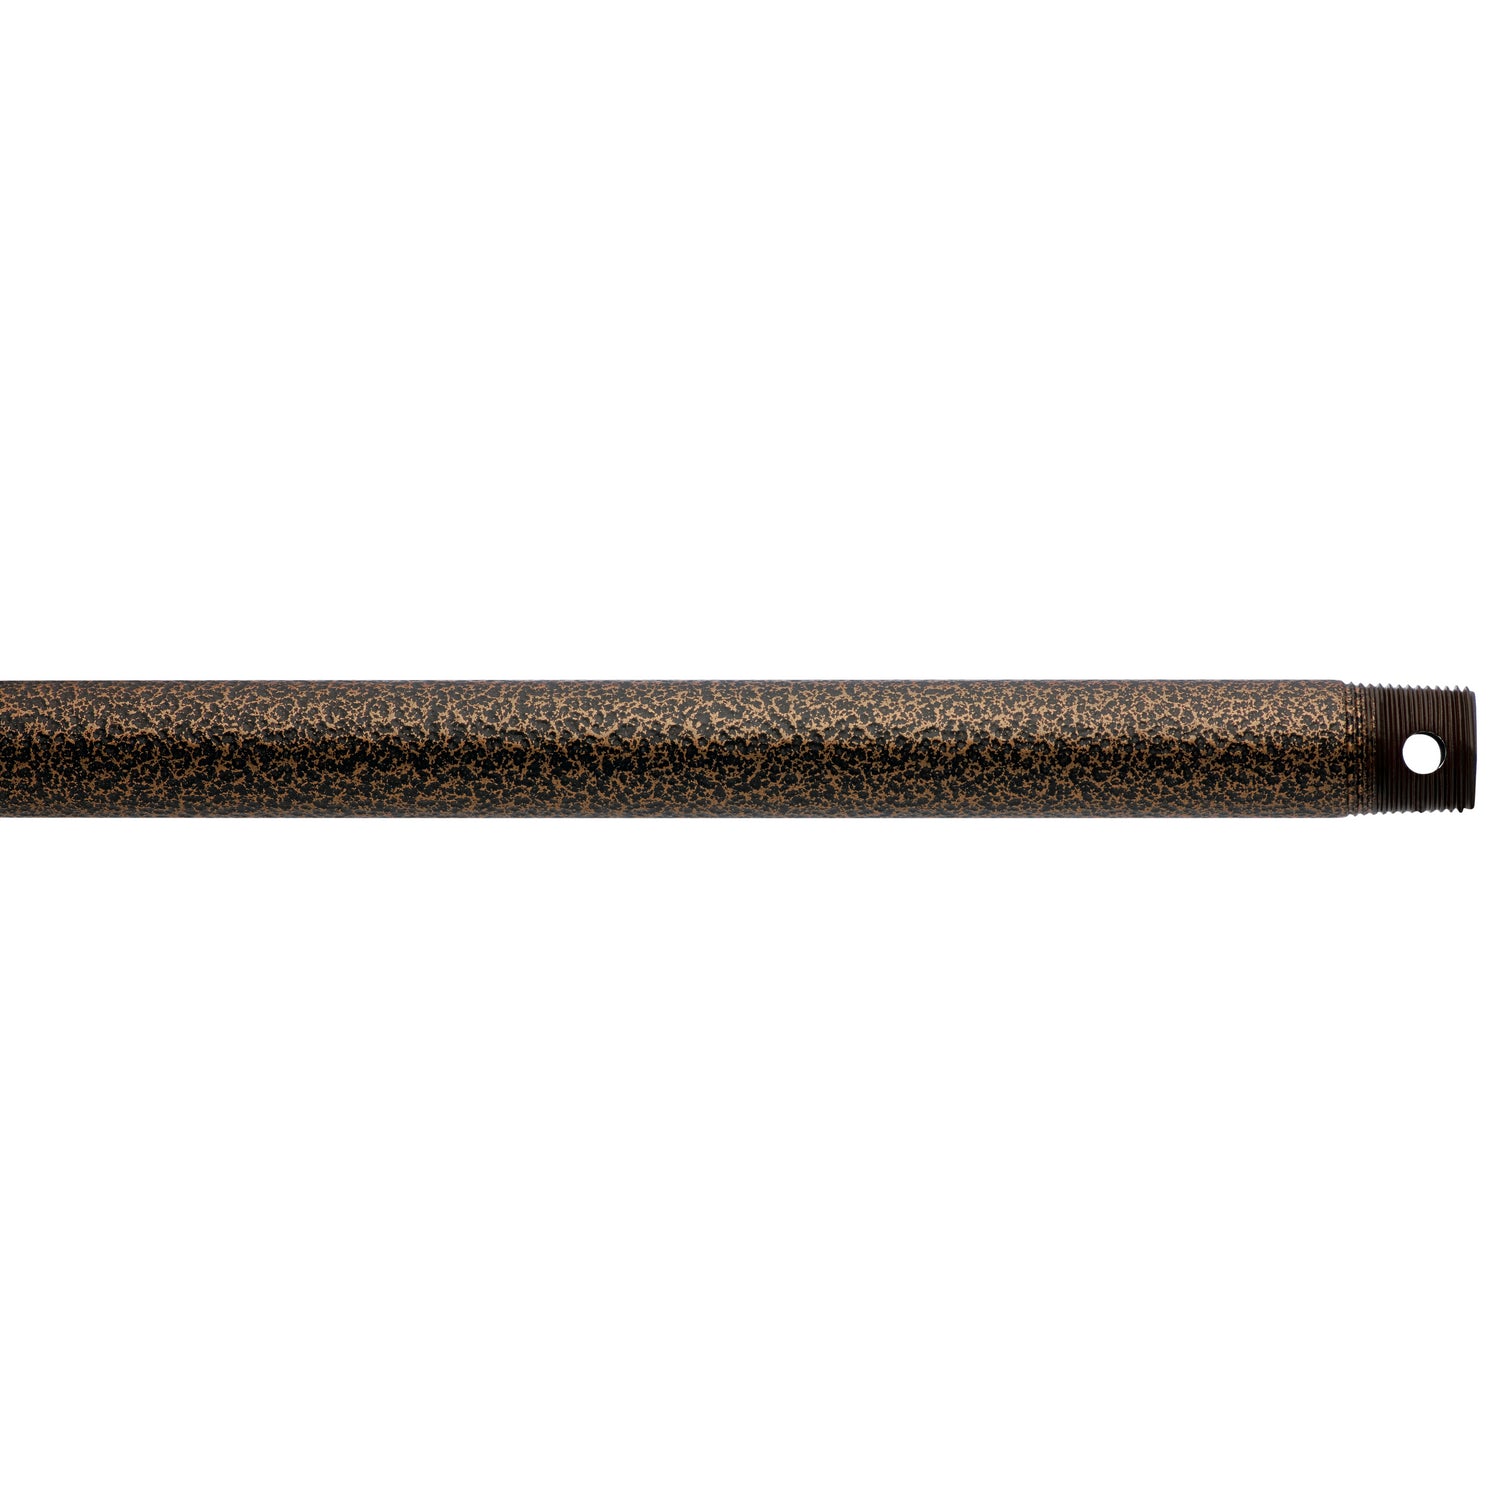 Kichler Canada - Fan Down Rod 60 Inch - Accessory - Weathered Copper Powder Coat- Union Lighting Luminaires Decor